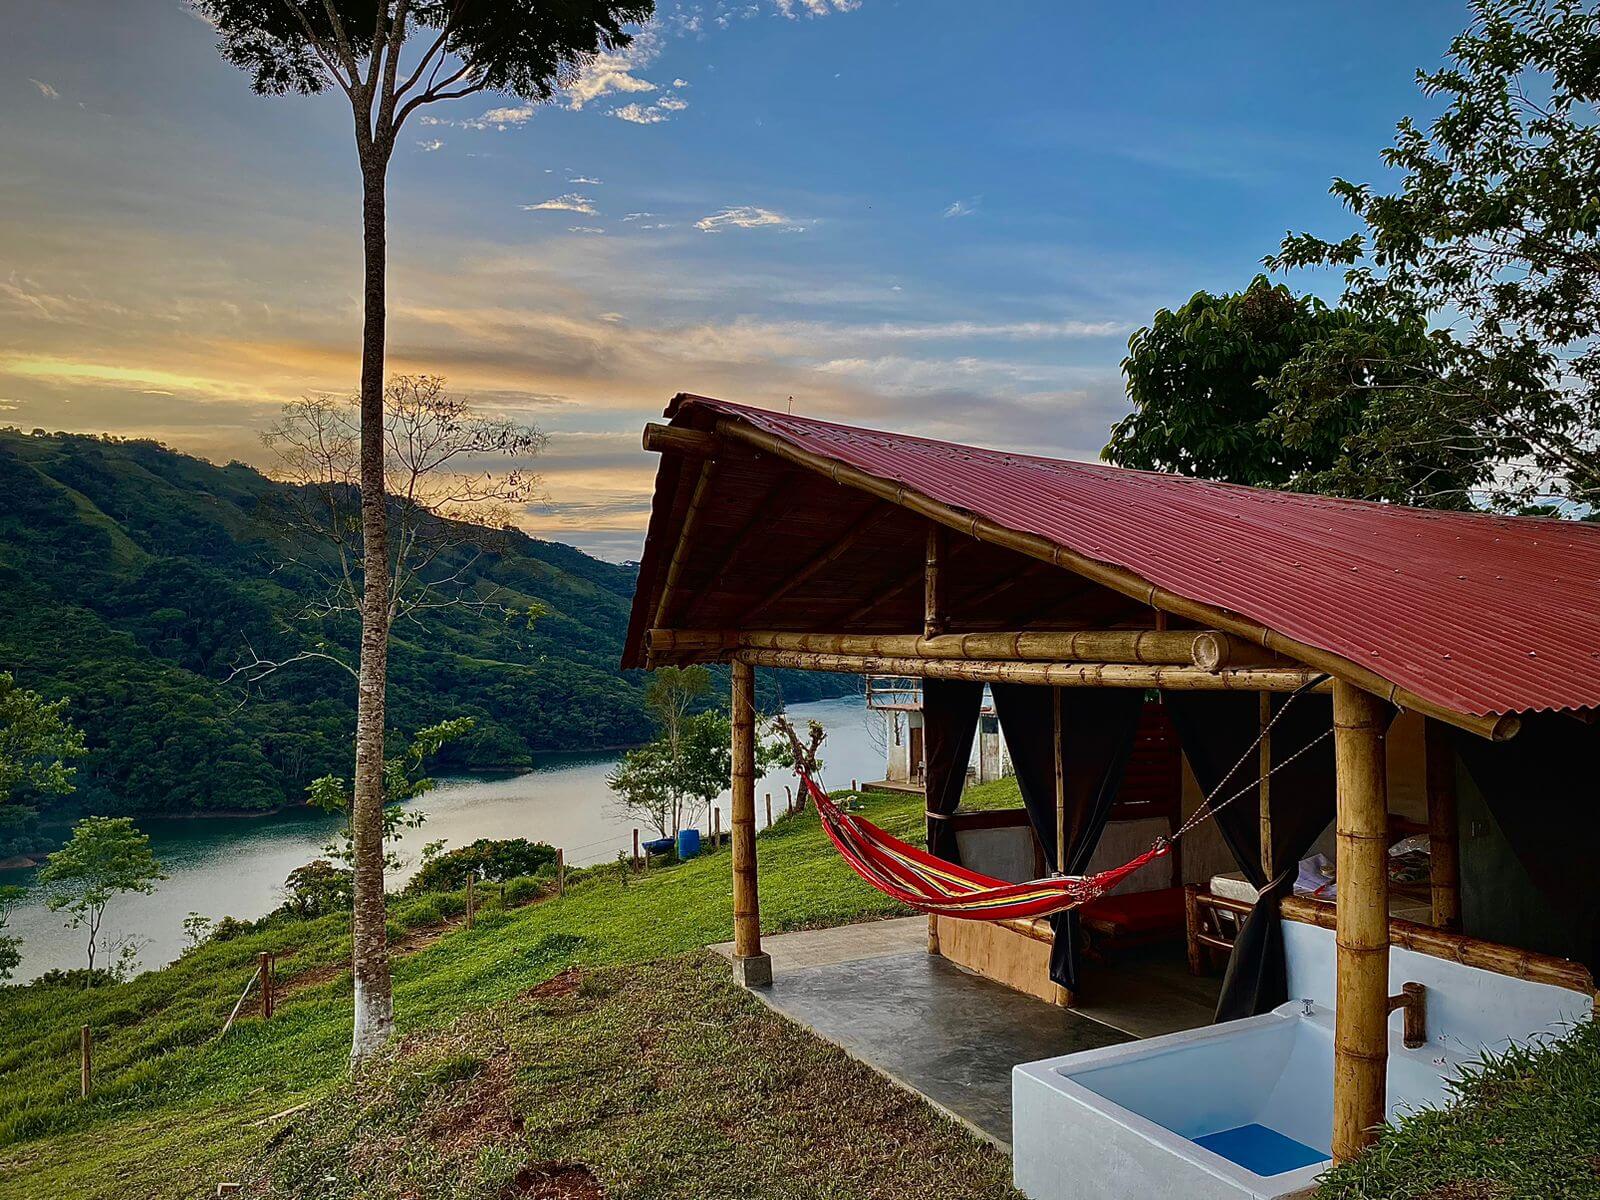 Cabaña con tina para parejas Norcasia, Caldas, Colombia Hospedajes Campestres 